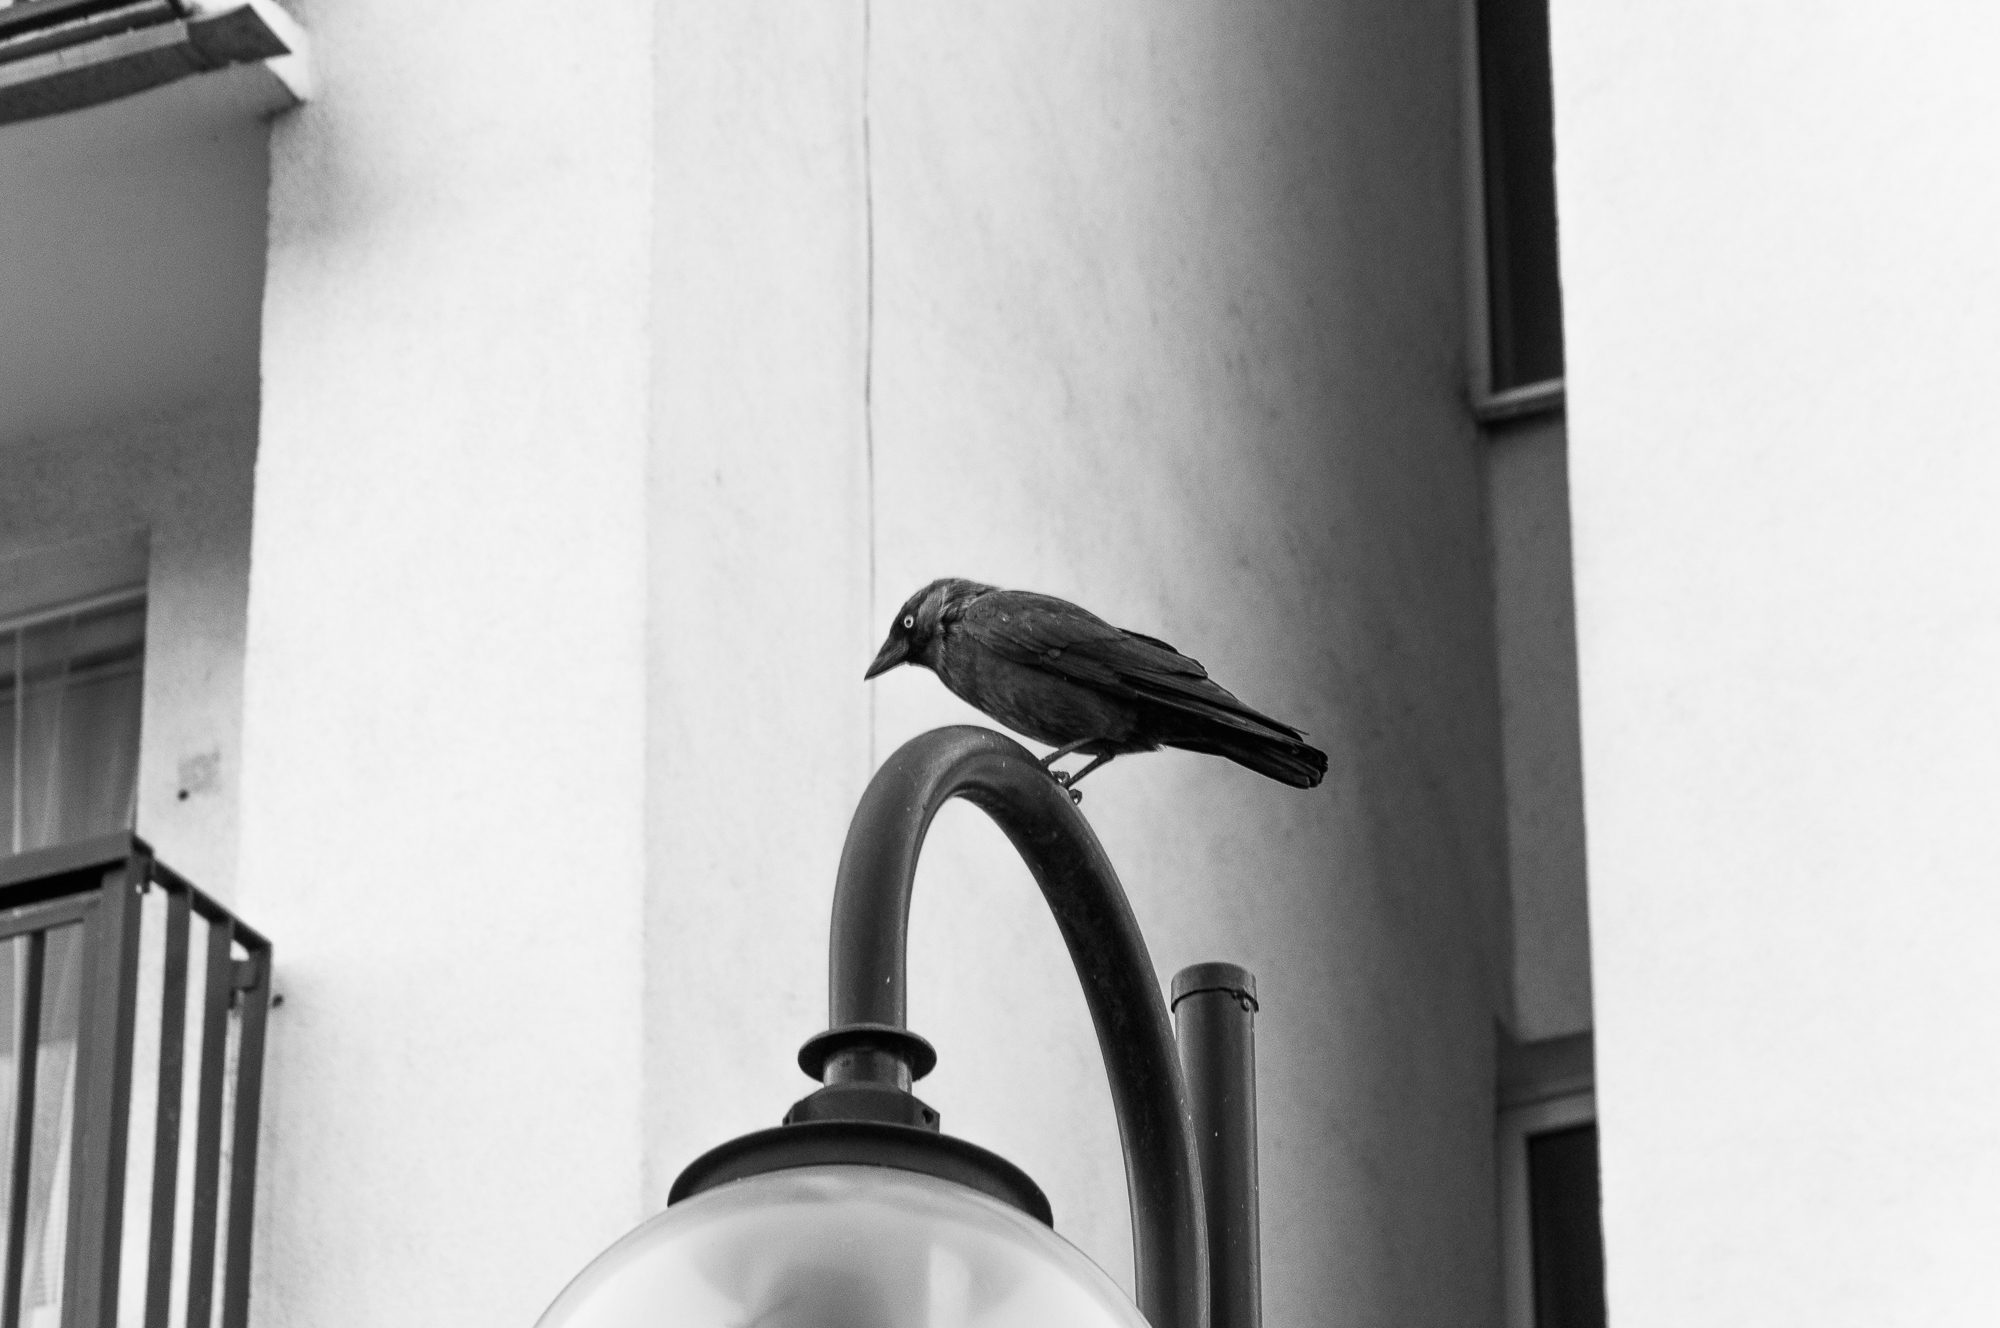 Adam Mazek Photography 2021. Warsaw Street Photography. Post: "I believe that goodness will prevail." Minimalism. Little bird.